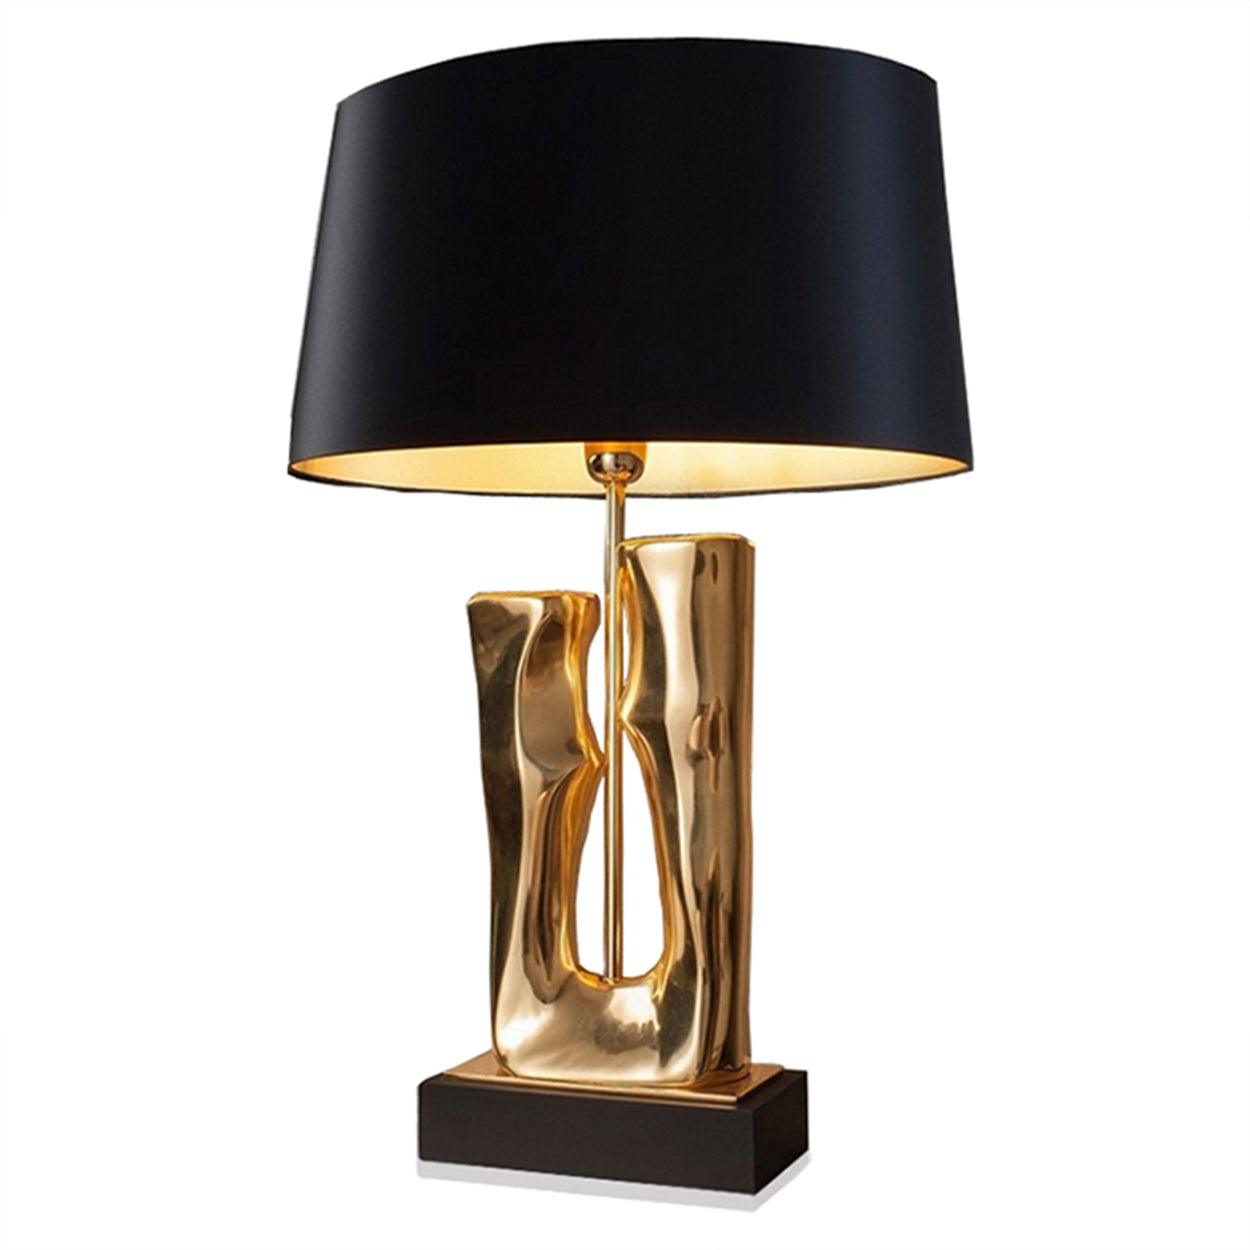 ELITE REGAL TABLE LAMP BEDSIDE LAMP - Ankur Lighting